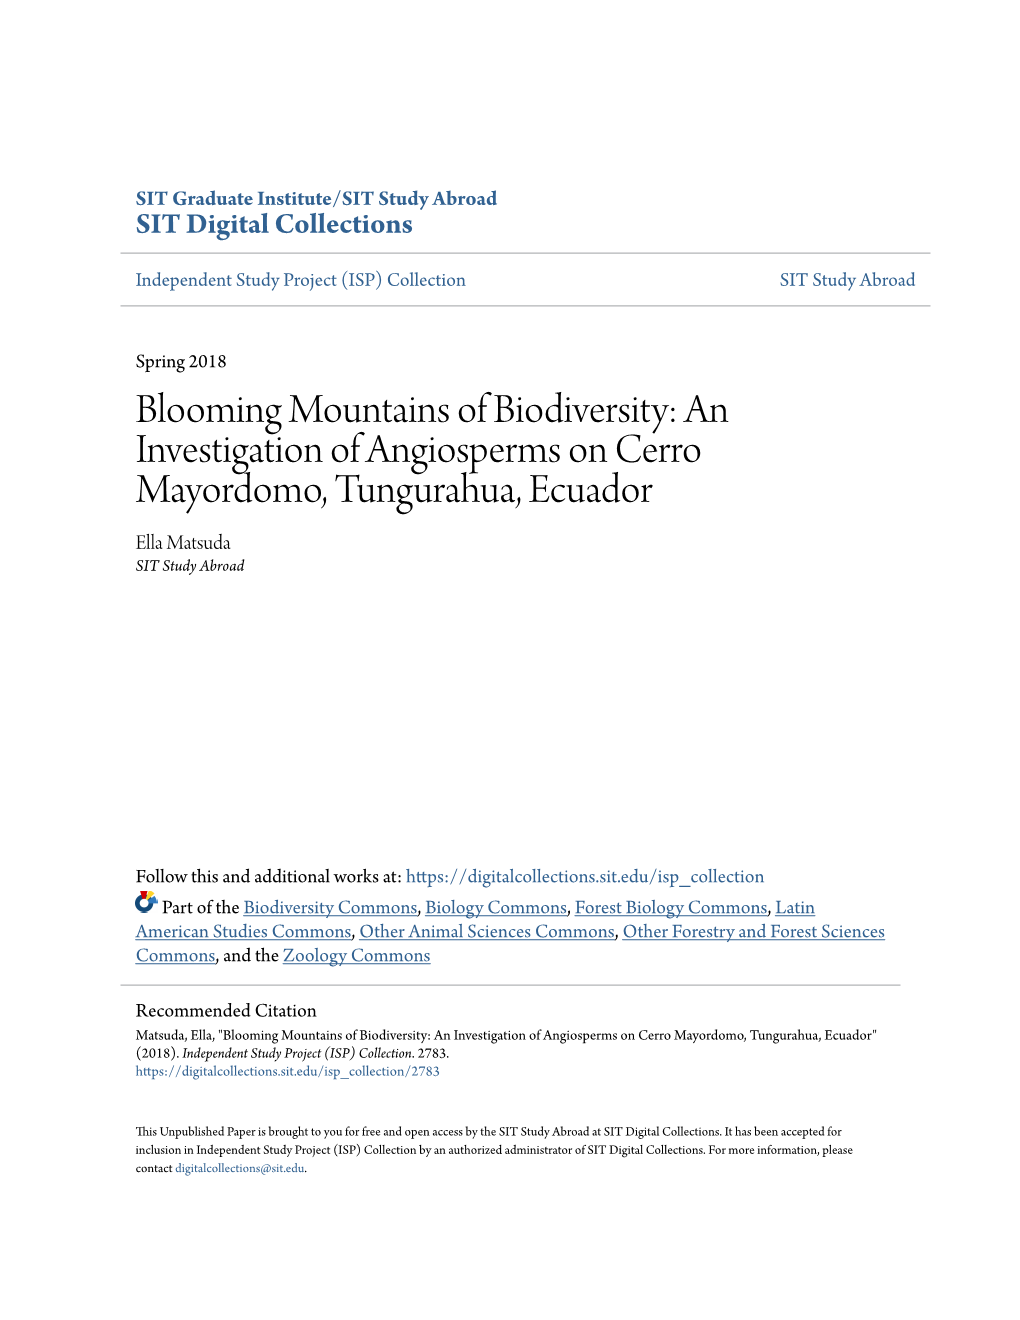 An Investigation of Angiosperms on Cerro Mayordomo, Tungurahua, Ecuador Ella Matsuda SIT Study Abroad